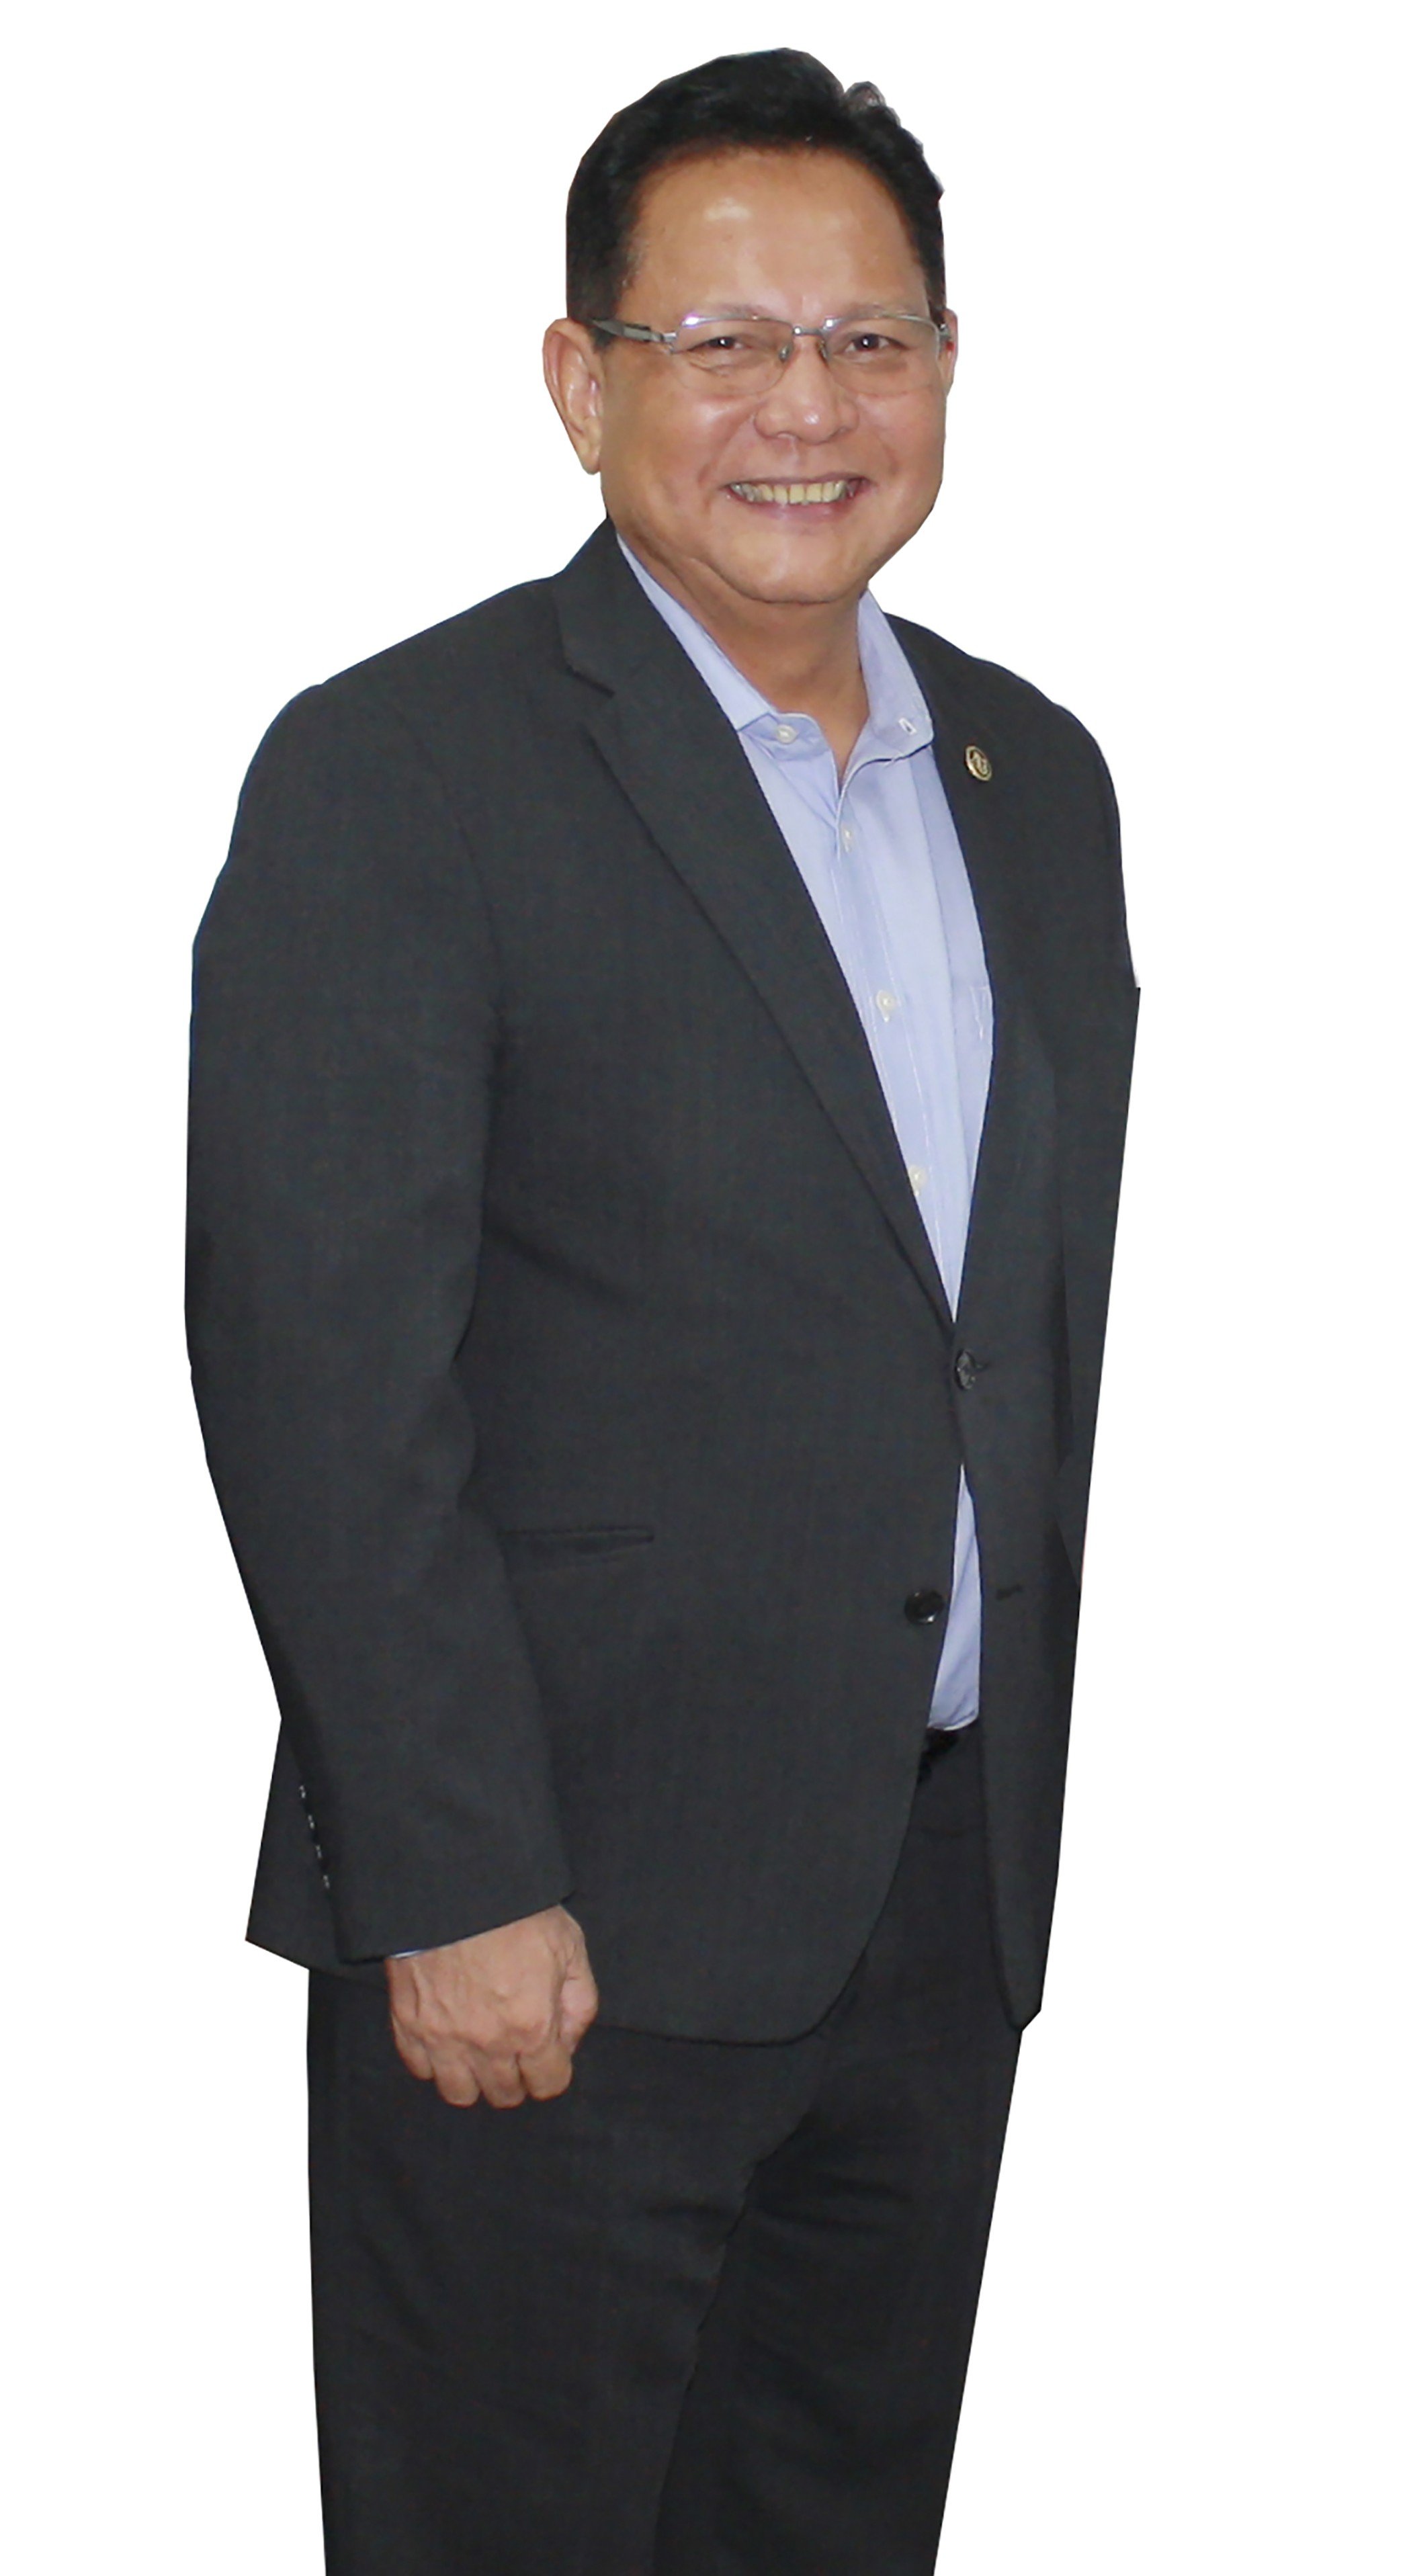 Raul Lambino, administrator and CEO